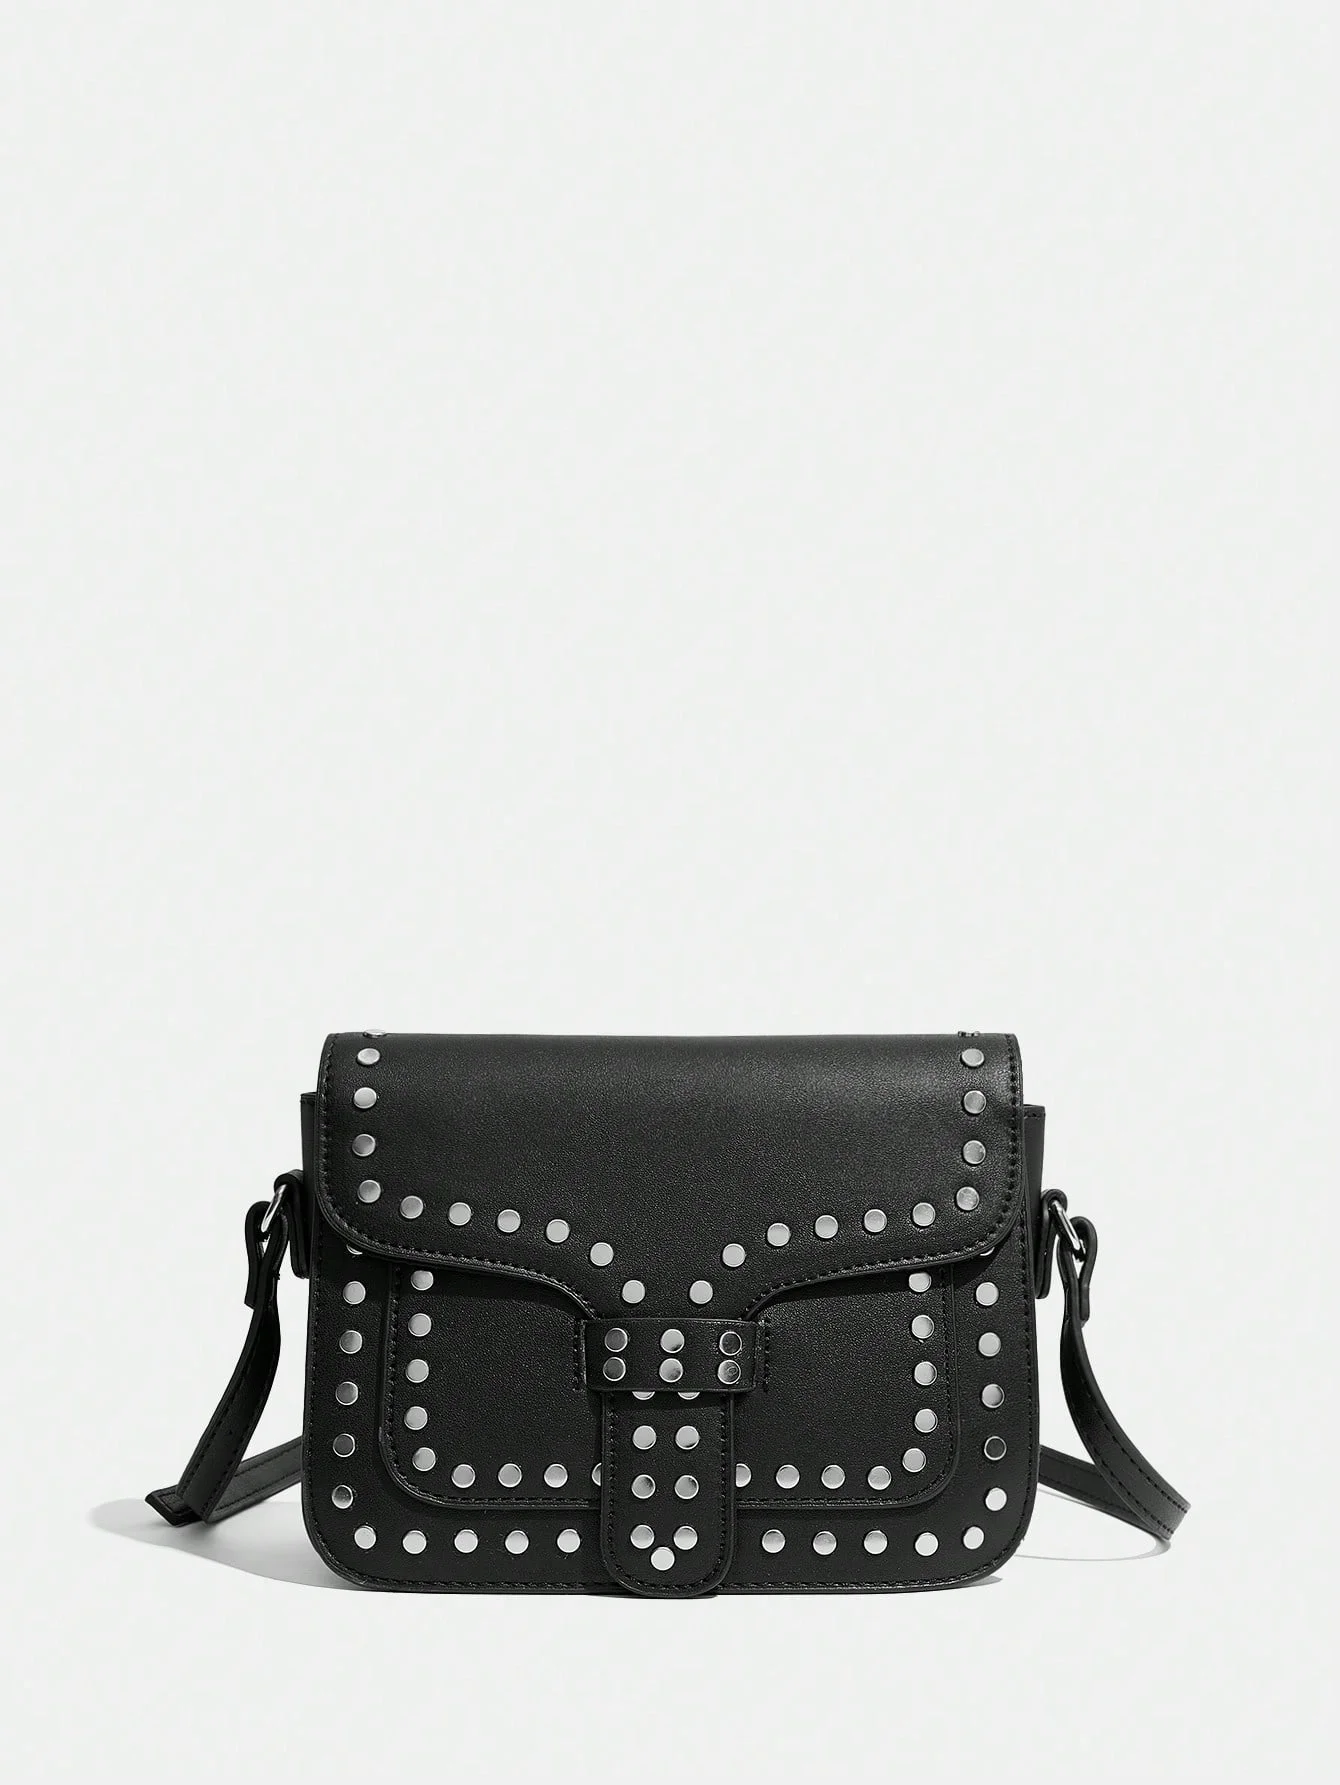 ladies luxury rivet decorative handbag fashion large capacity shoulder b... - $48.84